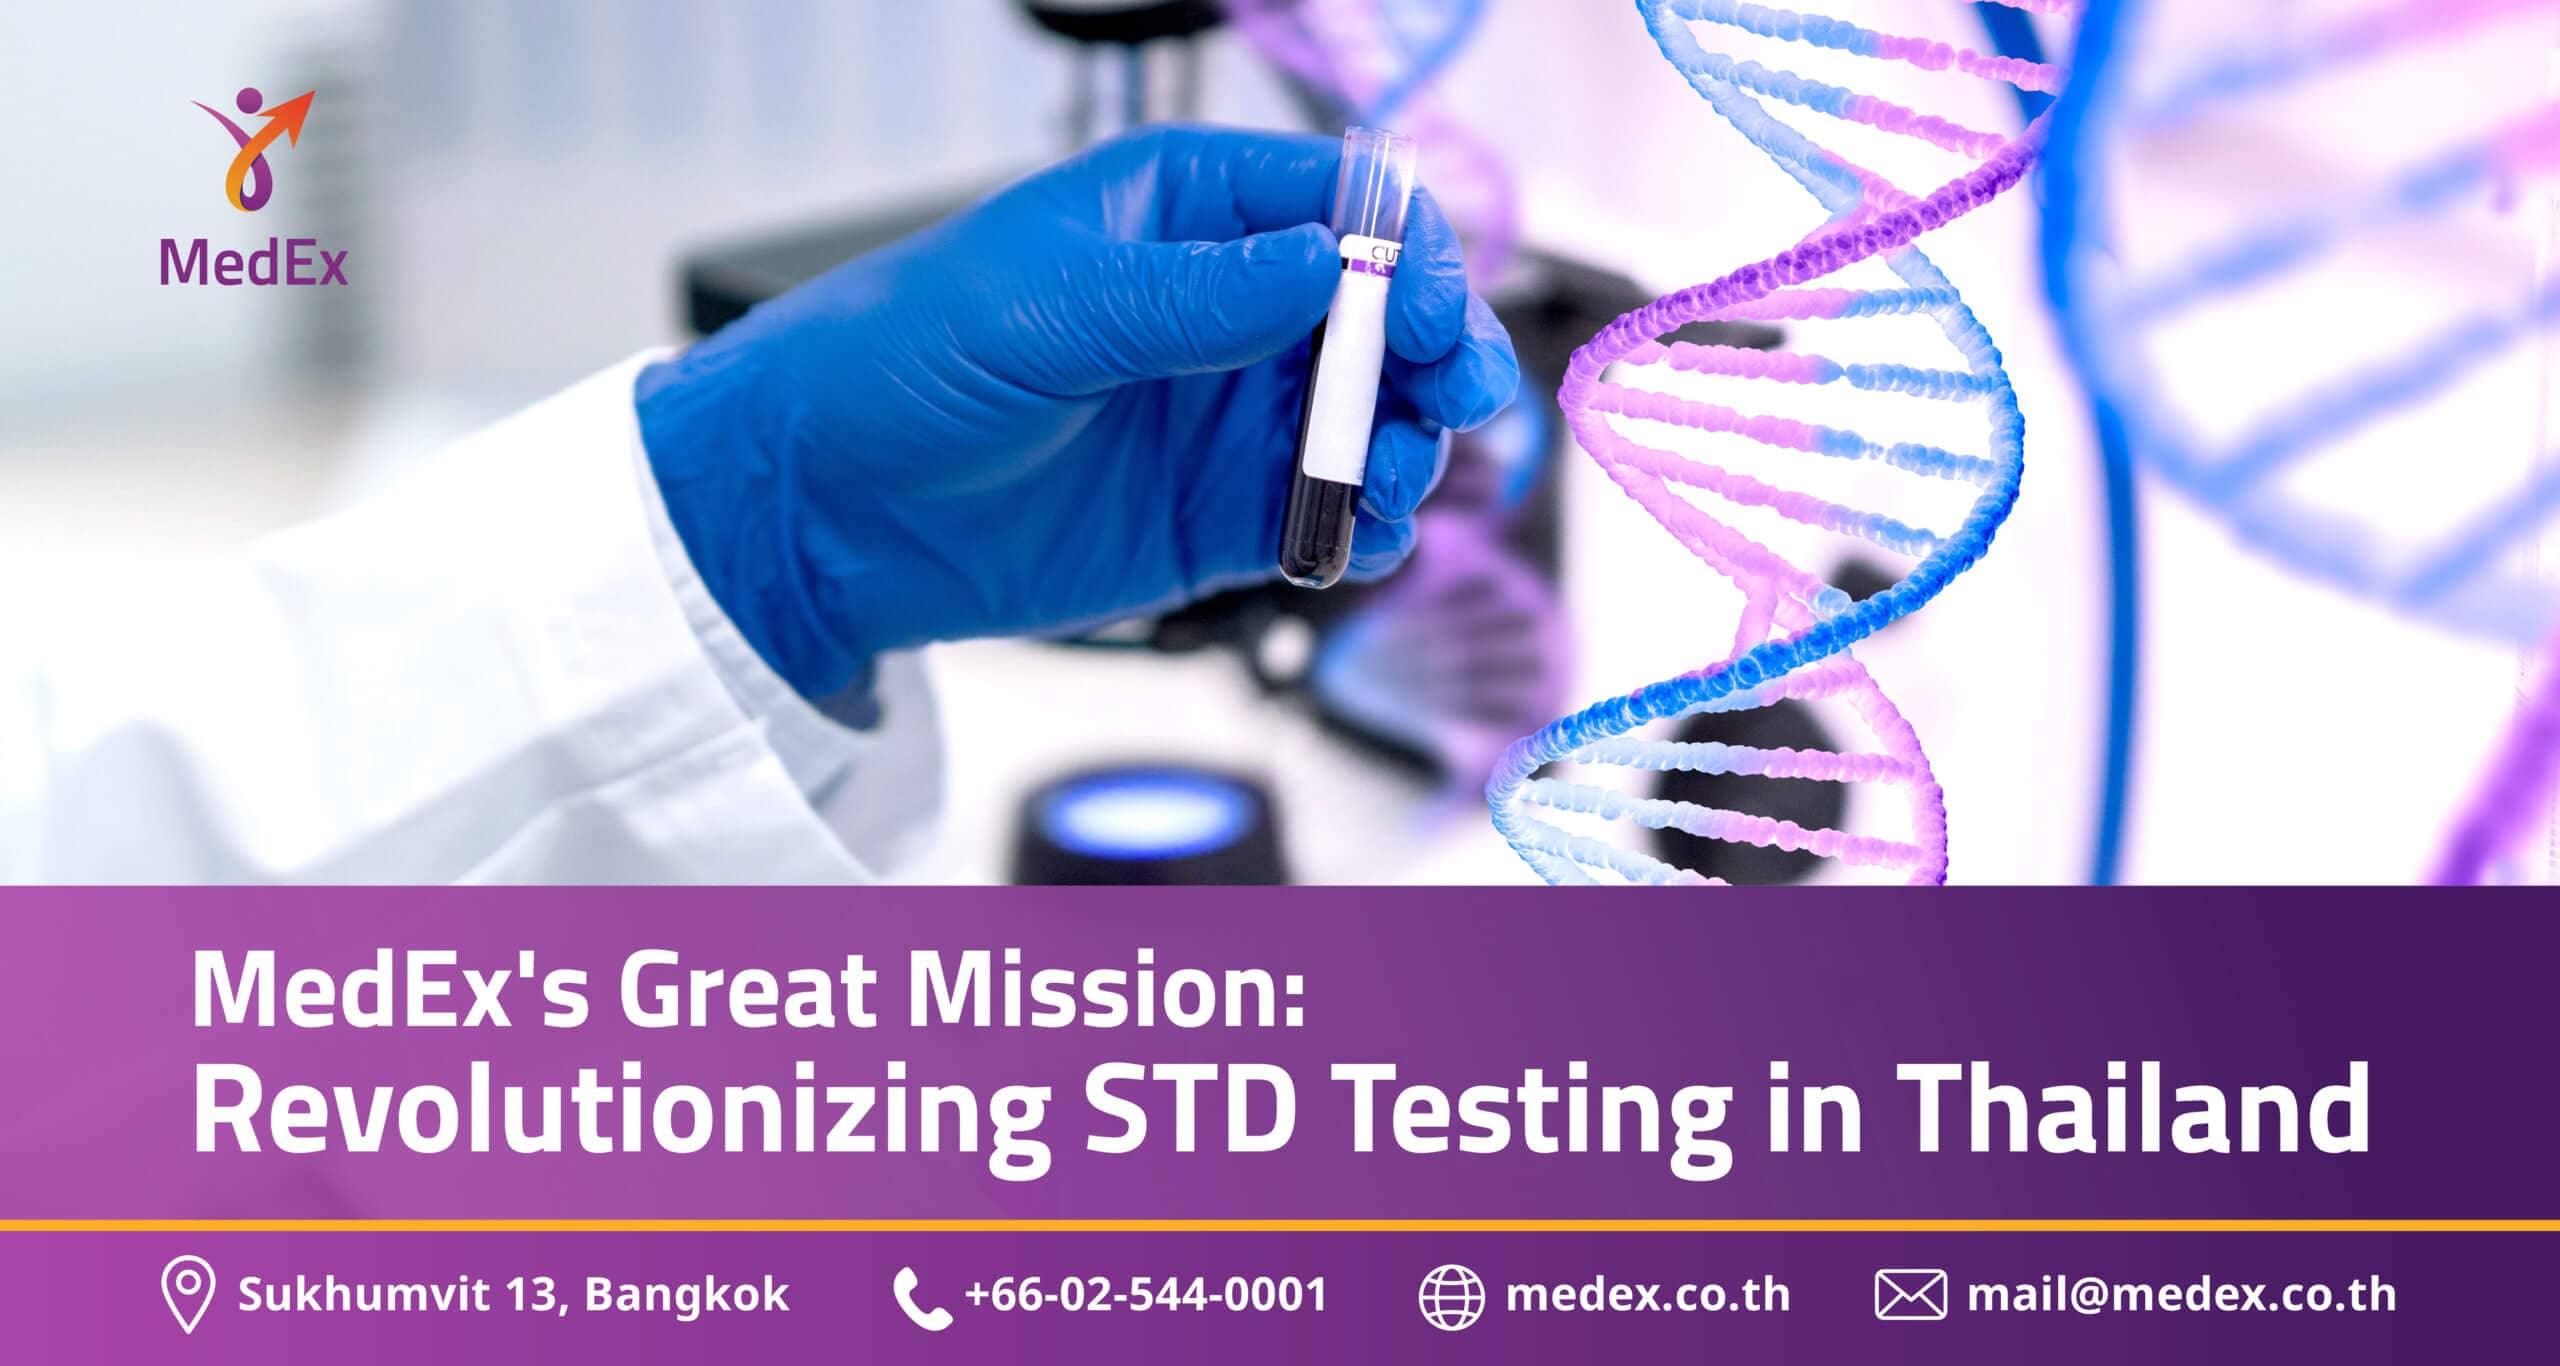 MedEx’s Great Mission: Revolutionizing STD Testing in Thailand